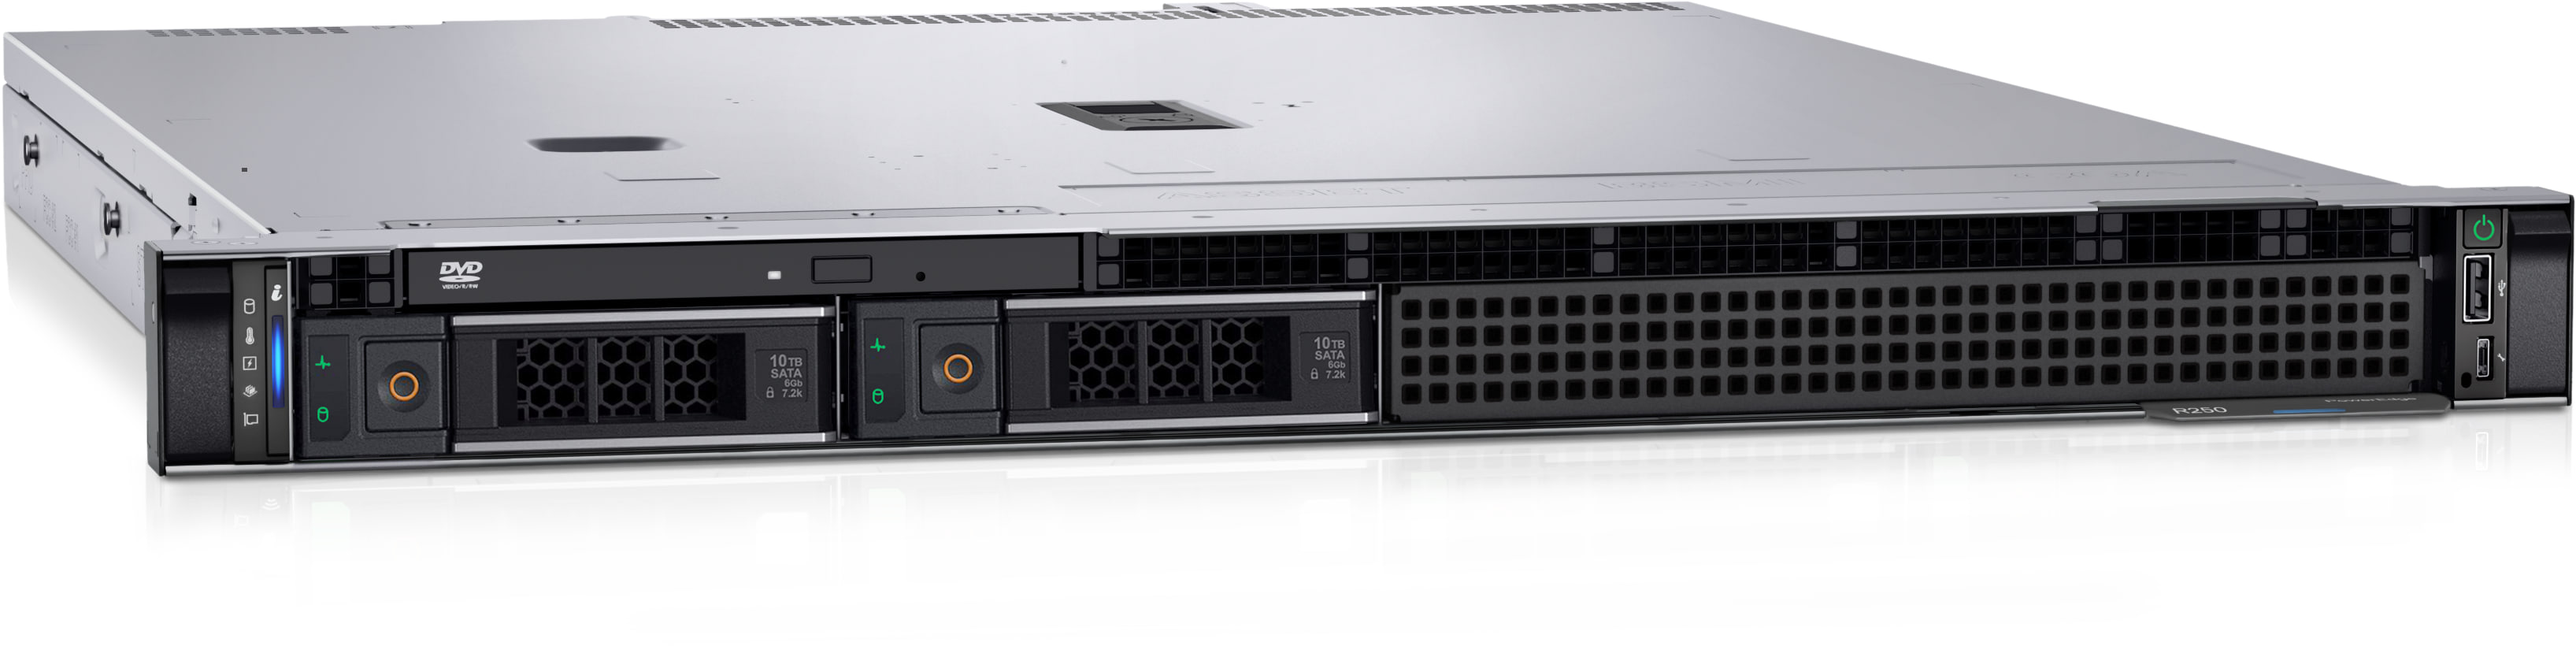 PowerEdge R250 Rack Server | Dell USA